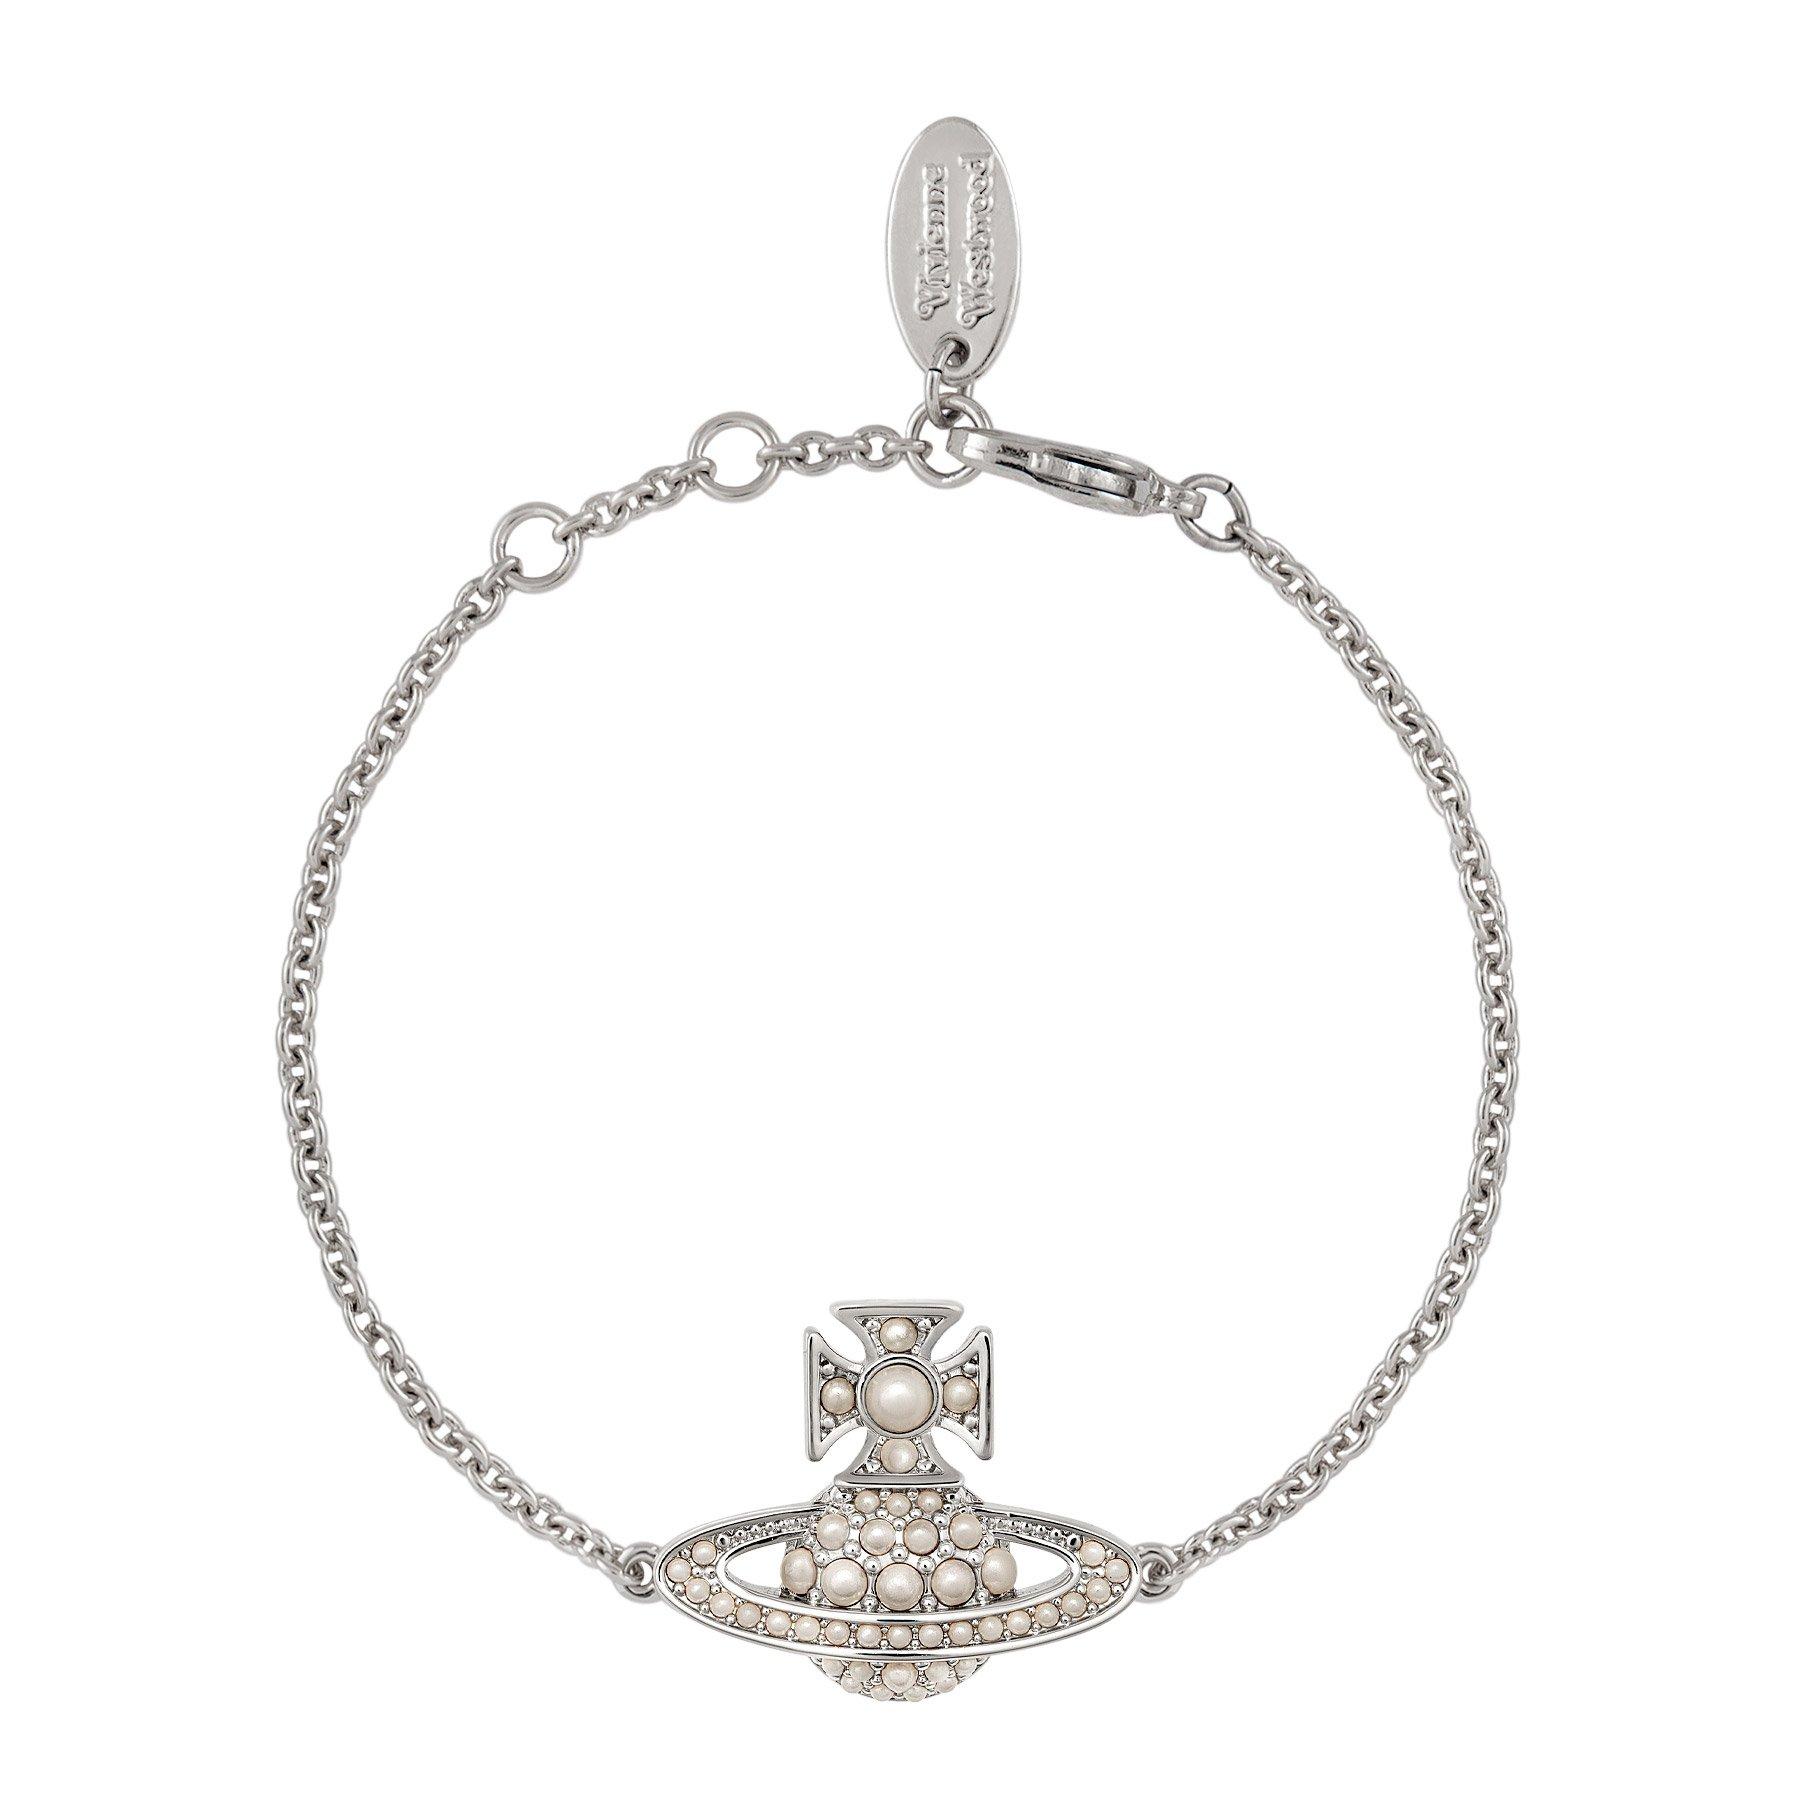 Vivienne Westwood Luzia Pearl Bracelet | 0136127 | Beaverbrooks the ...